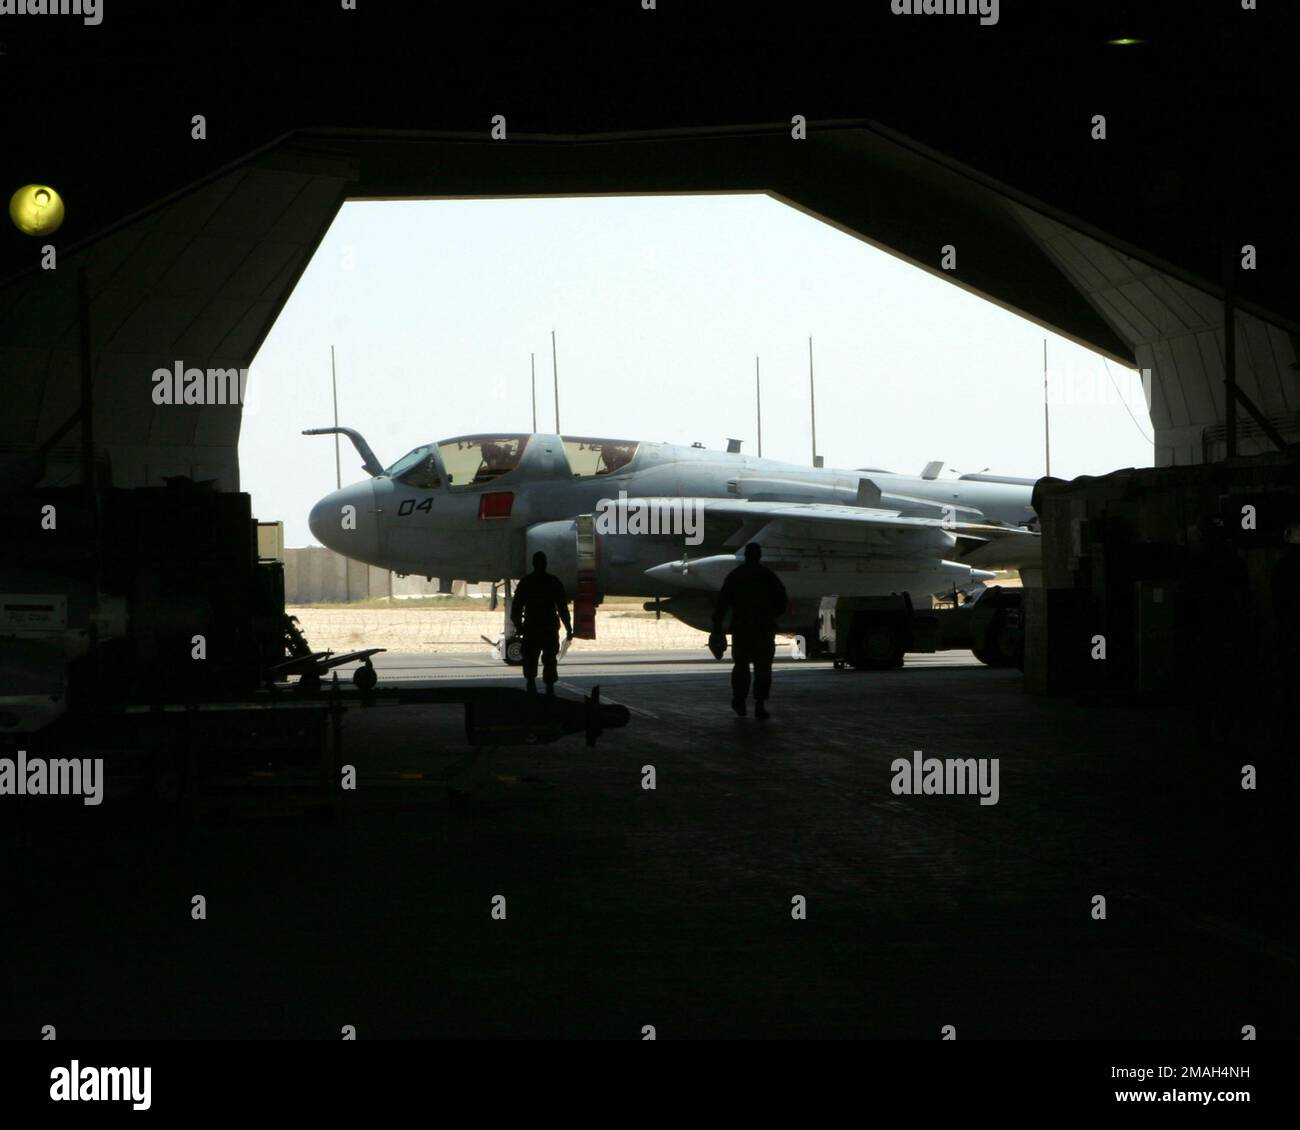 070321-M-2166H-082. Subject Operation/Series: IRAQI FREEDOM Base: Al Asad Air Base State: Al Anbar Country: Iraq (IRQ) Scene Major Command Shown: VMAQ-1 Stock Photo